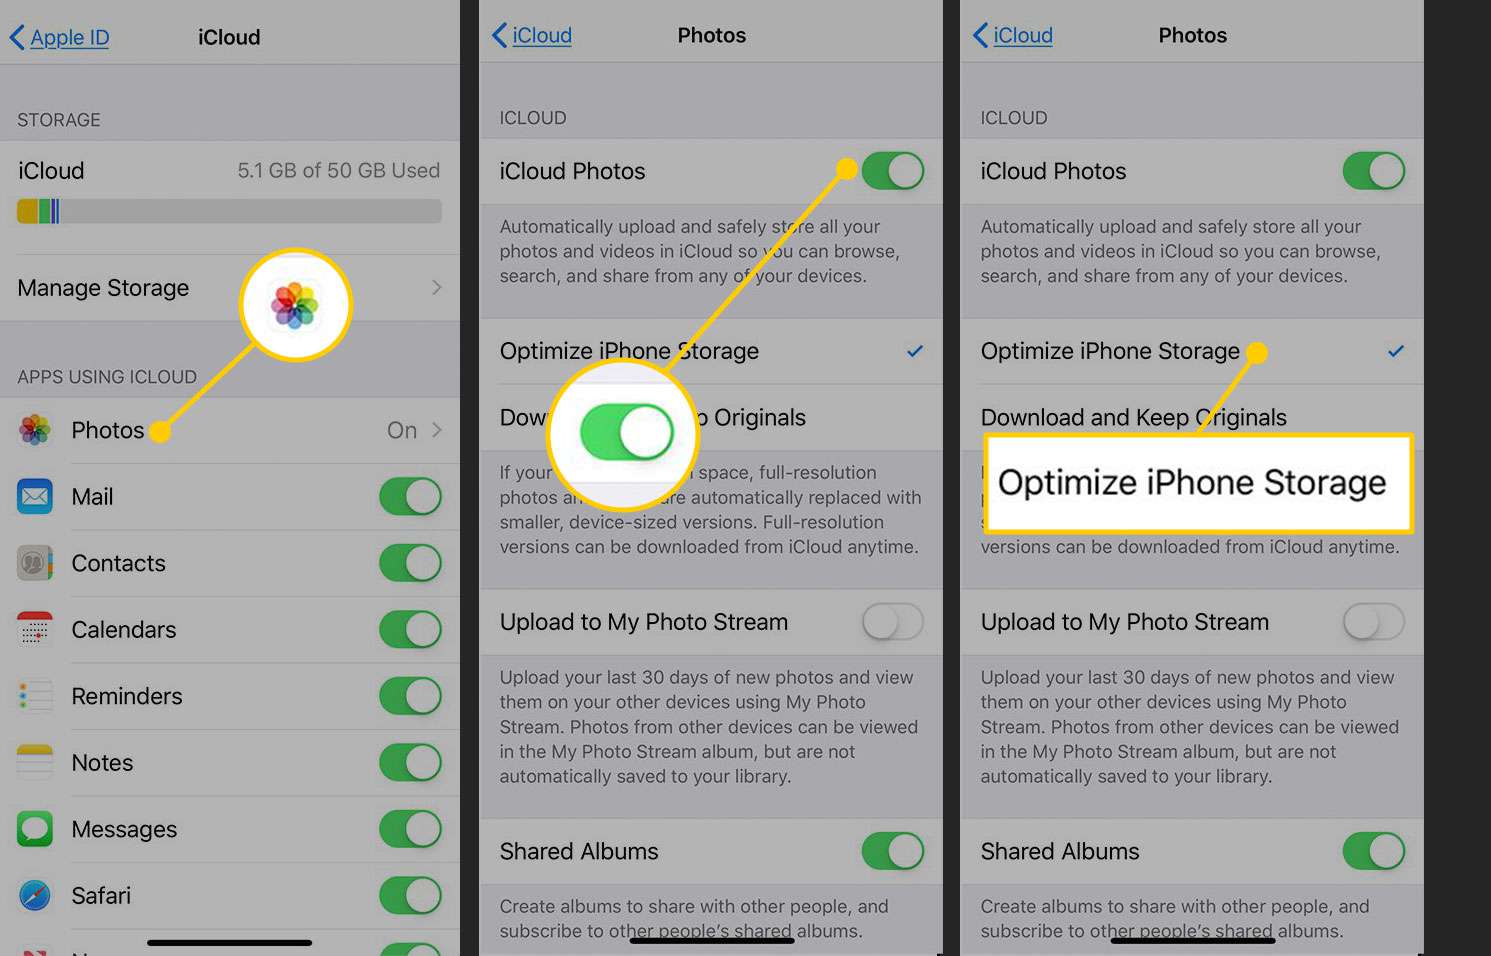 Skärmarna iCloud och Photos med Optimize iPhone Storage markerad